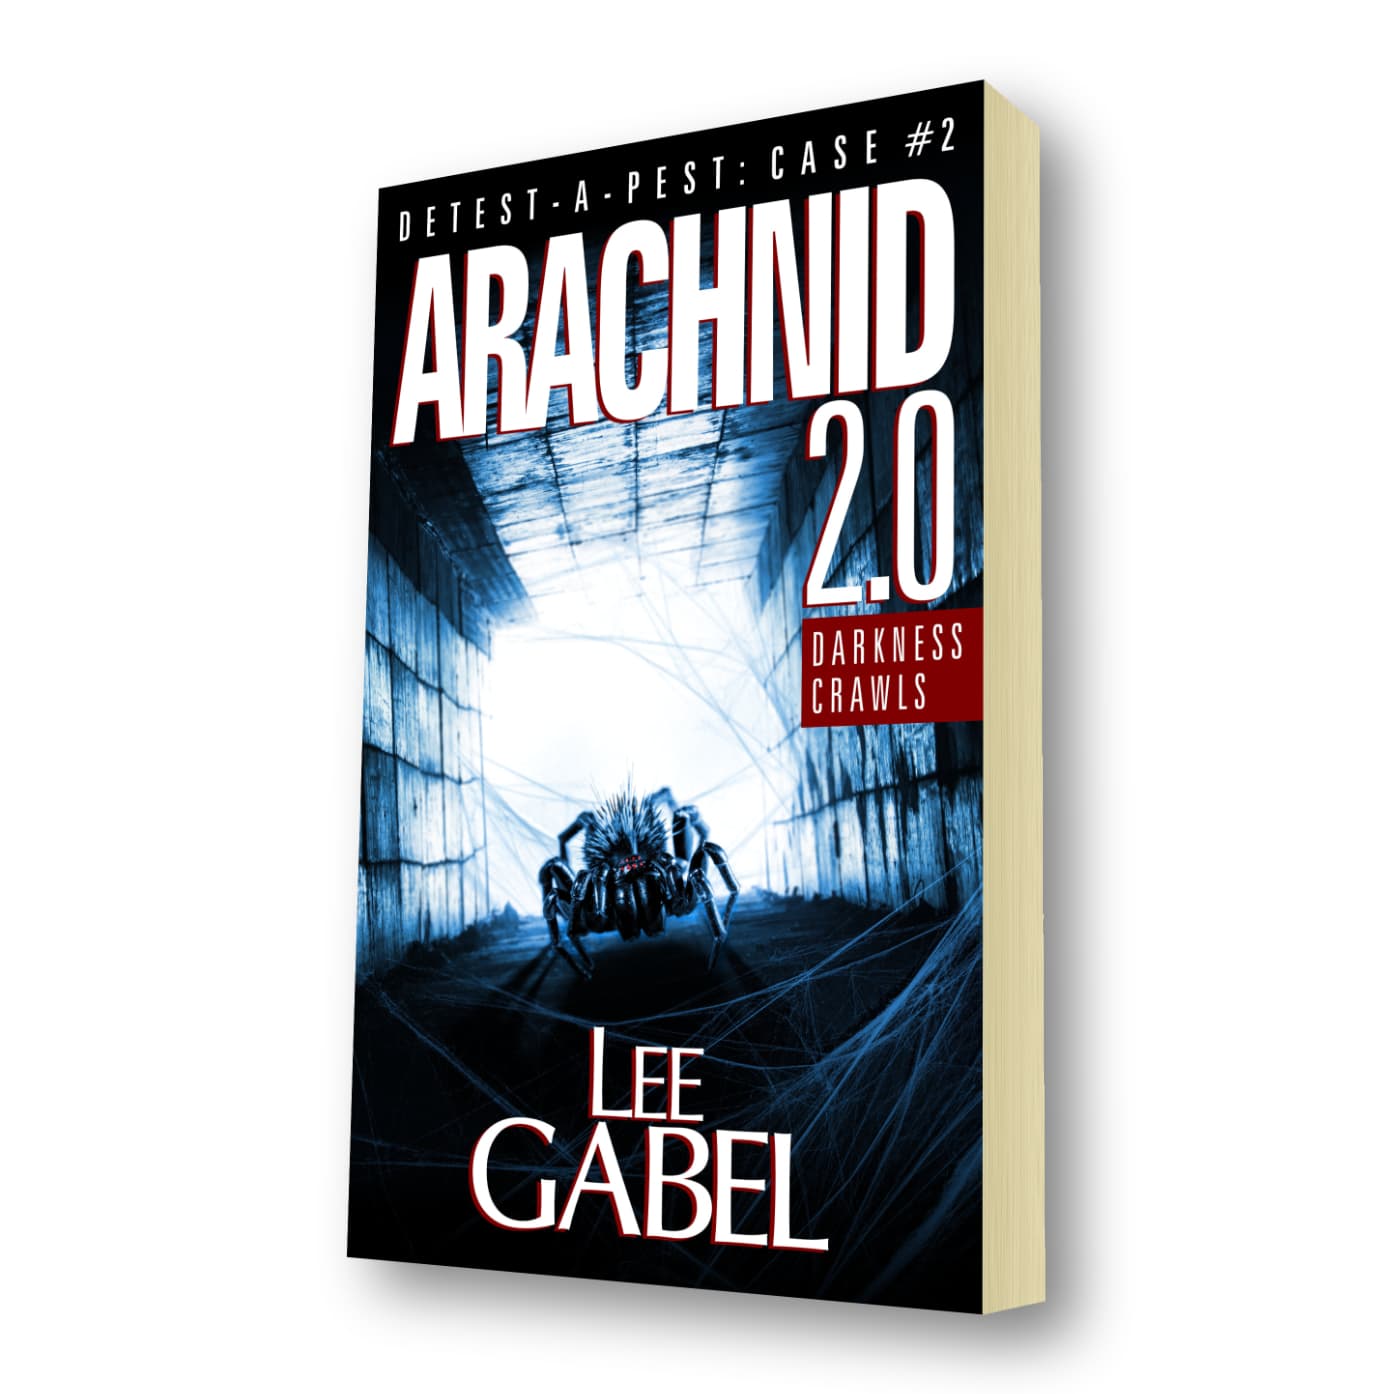 Arachnid 2.0 virtual paperback image (504 pages.)